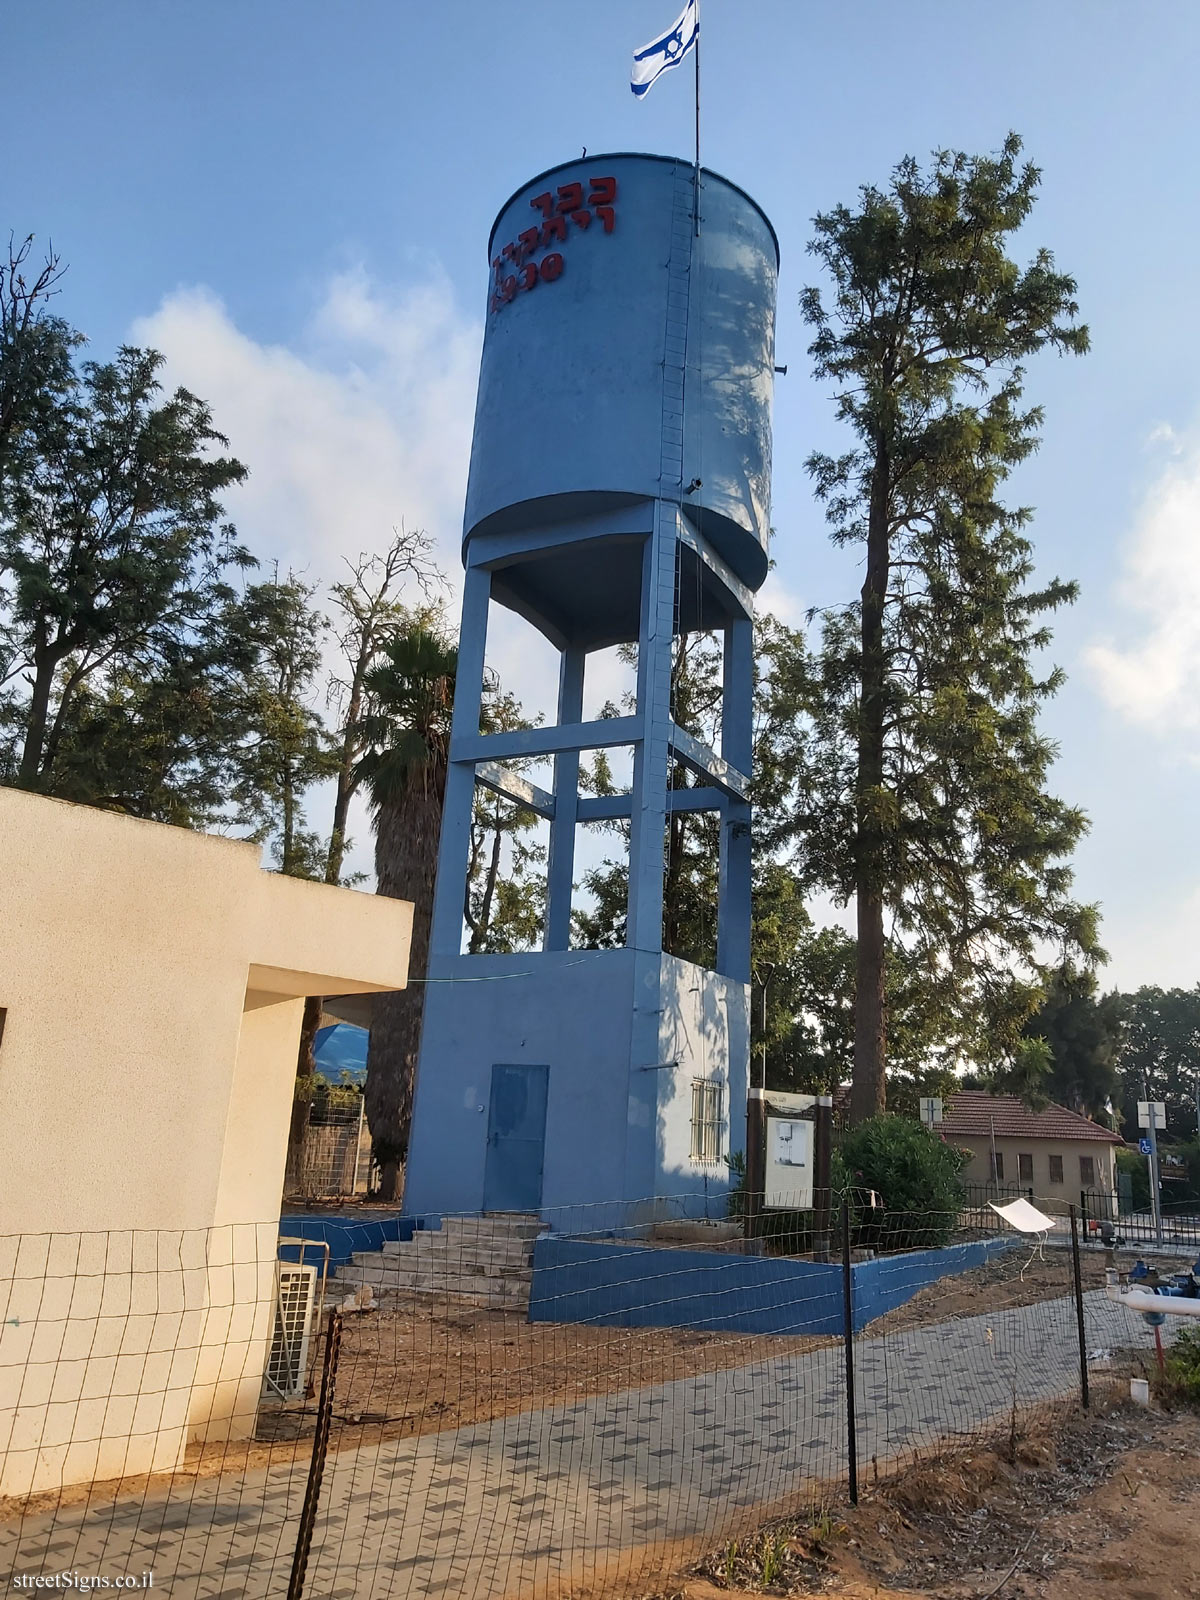 Kfar Vitkin - The Water tower - Mish’ol Ganim 2, Kfar Vitkin, Israel